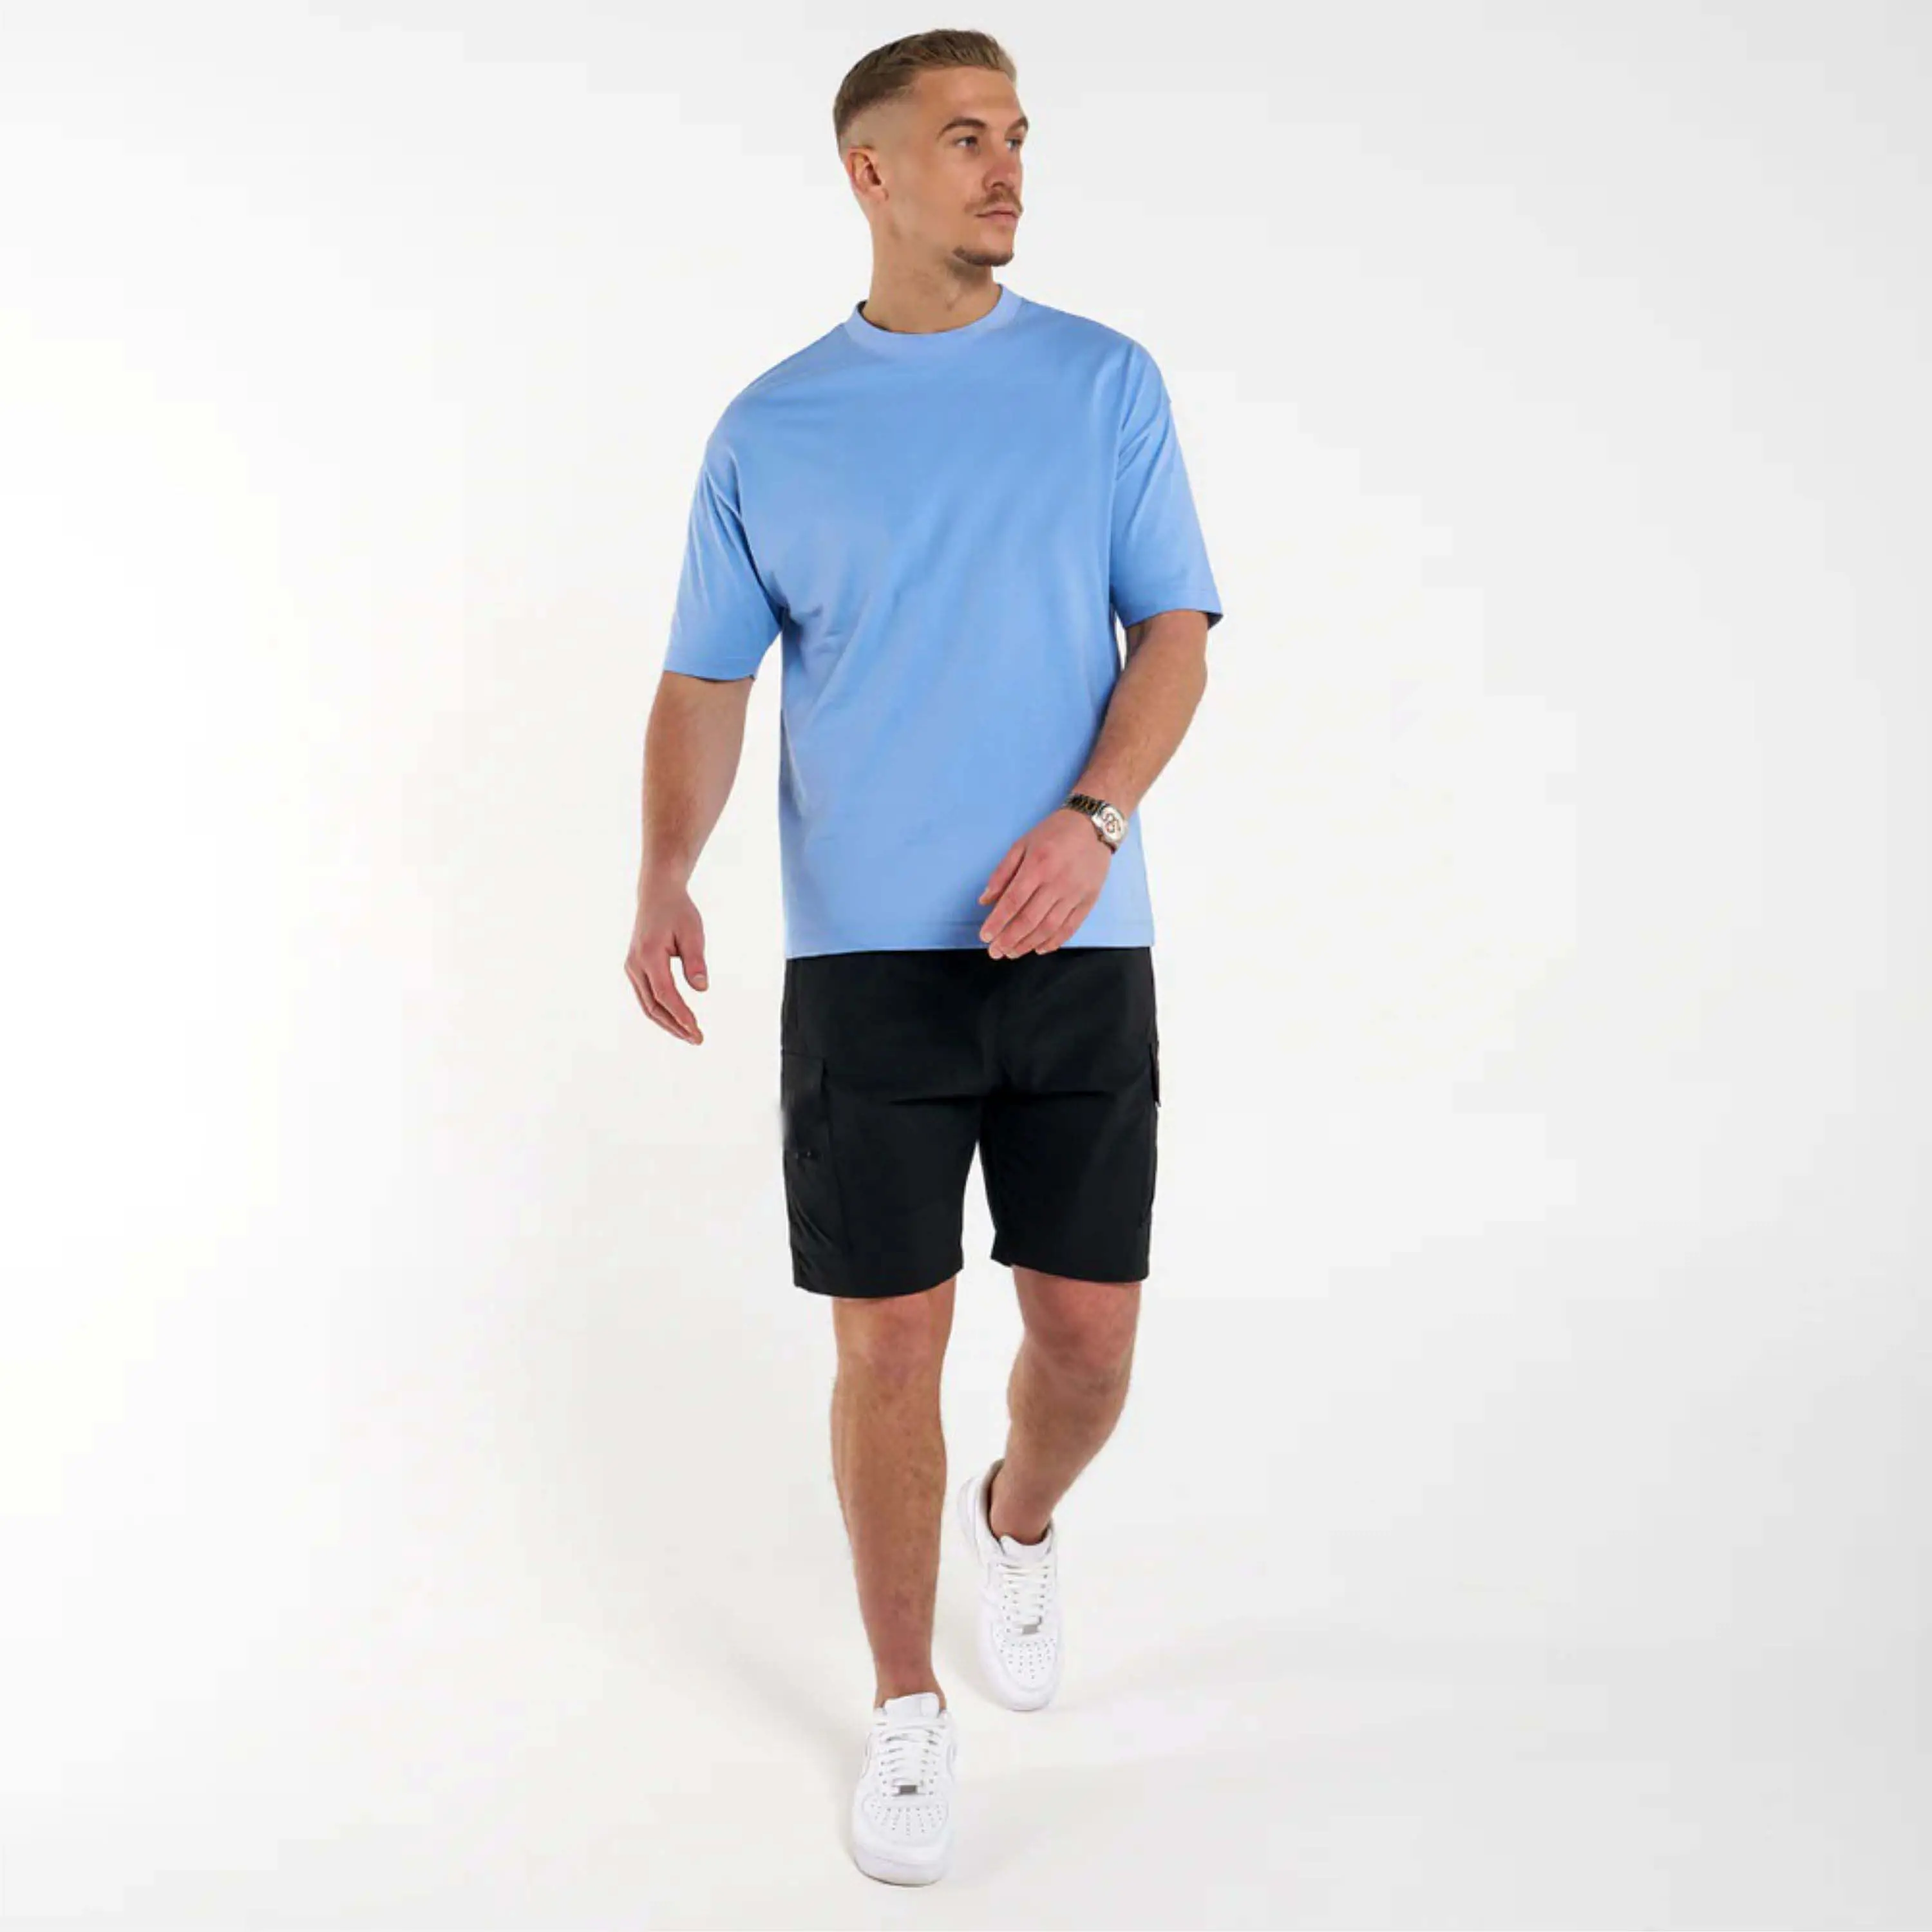 Athleisure Streetwear Tシャツ-ストレッチ生地、吸湿発散性、ジムからストリートへのスタイル